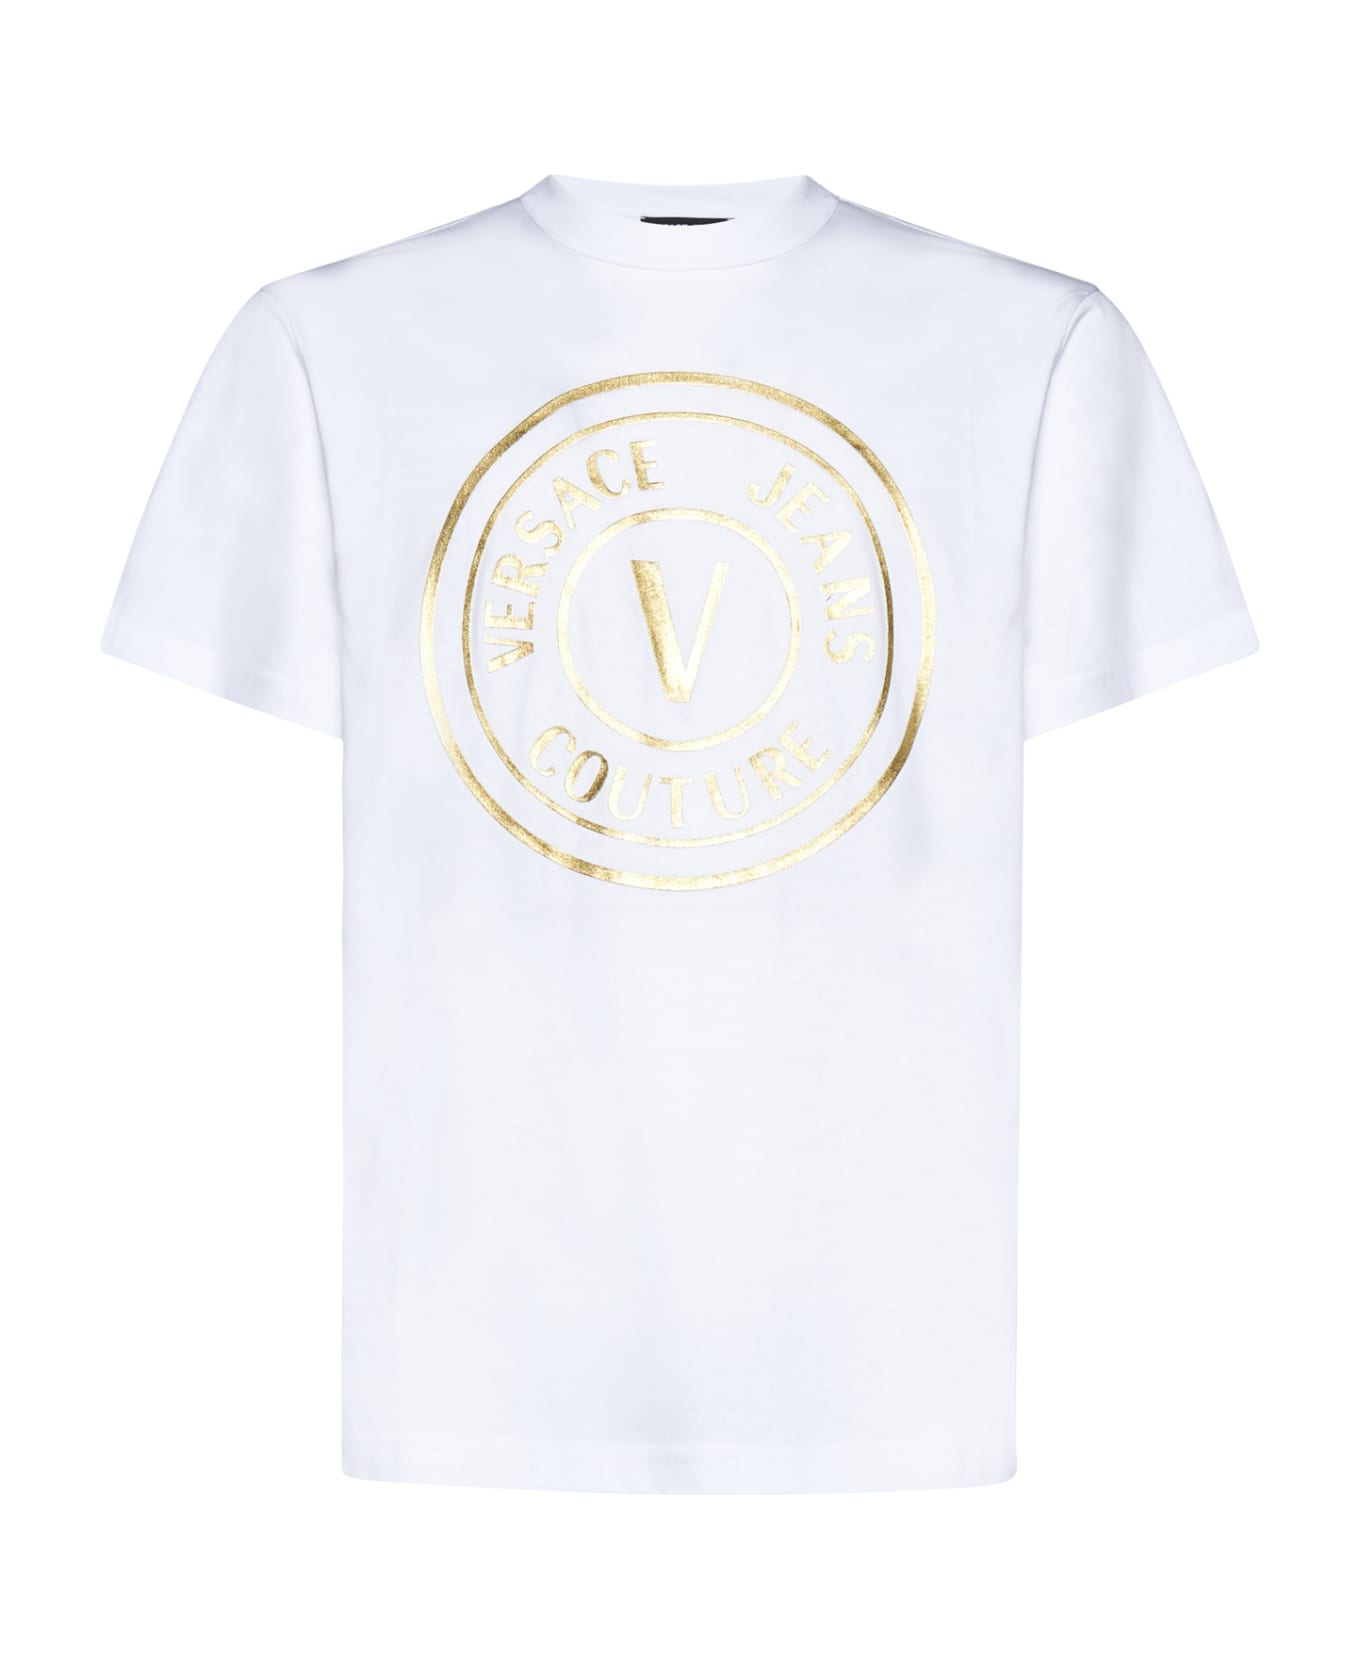 Versace Jeans Couture V Emblem T-shirt - White gold